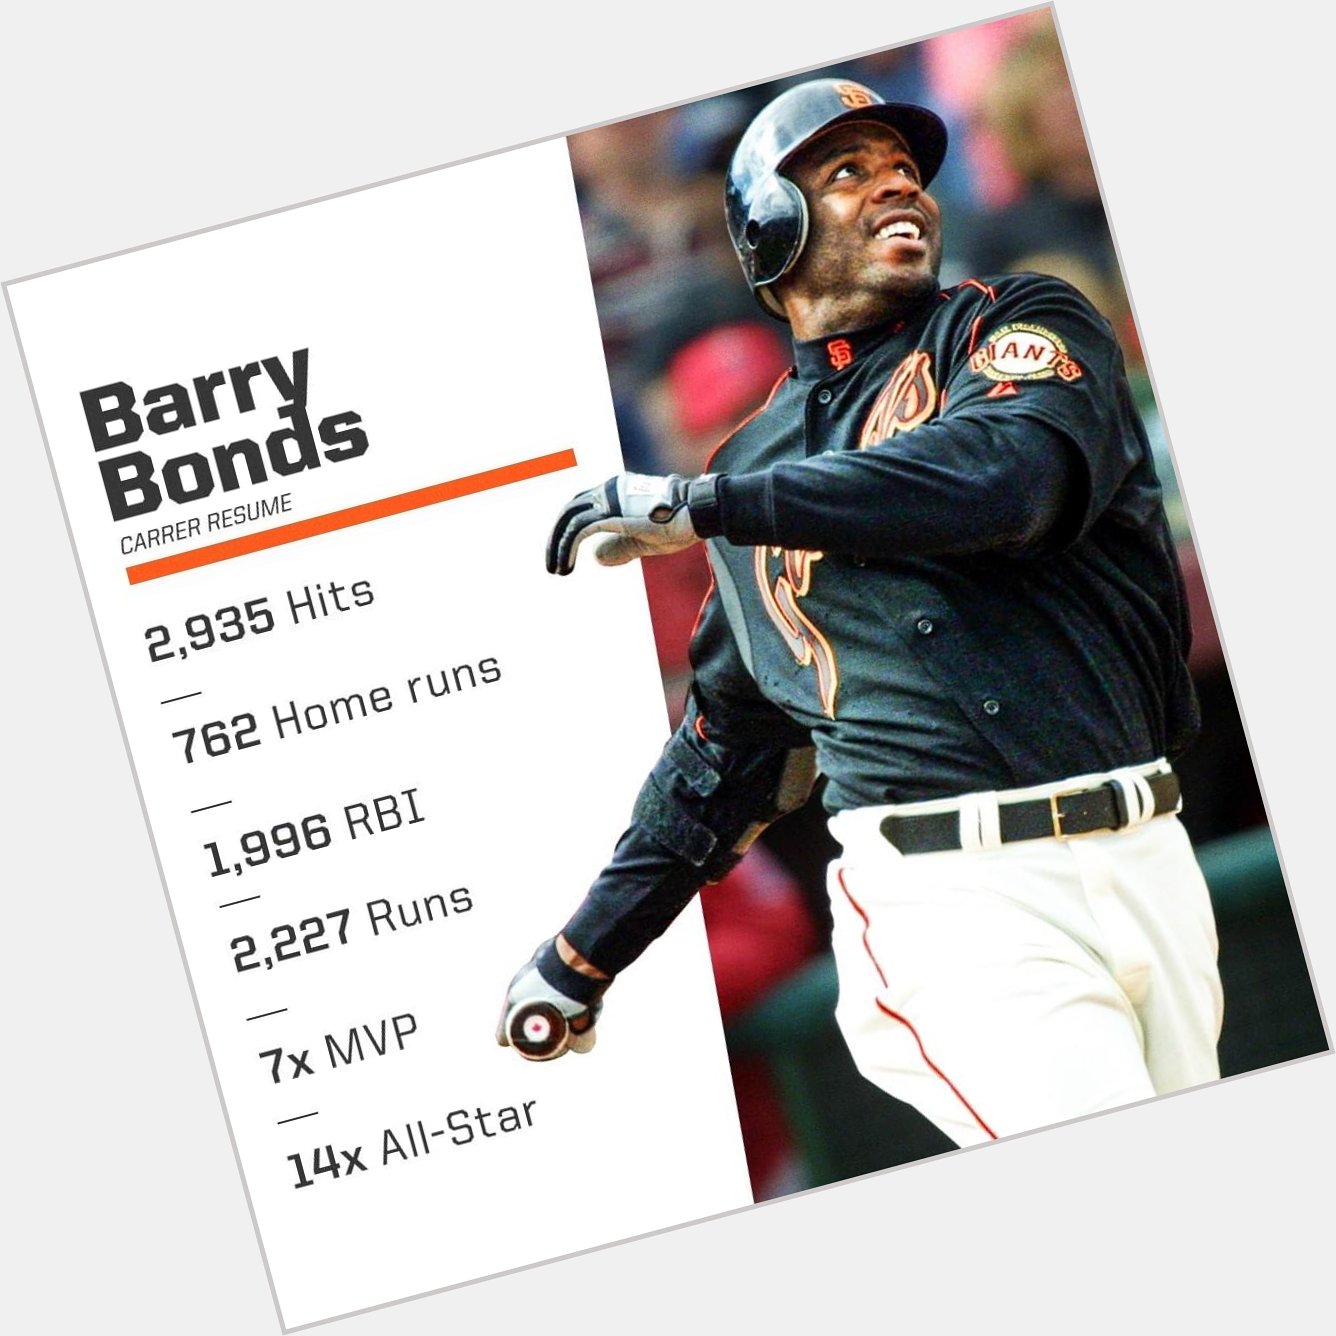 Happy 56th birthday, Barry Bonds! 